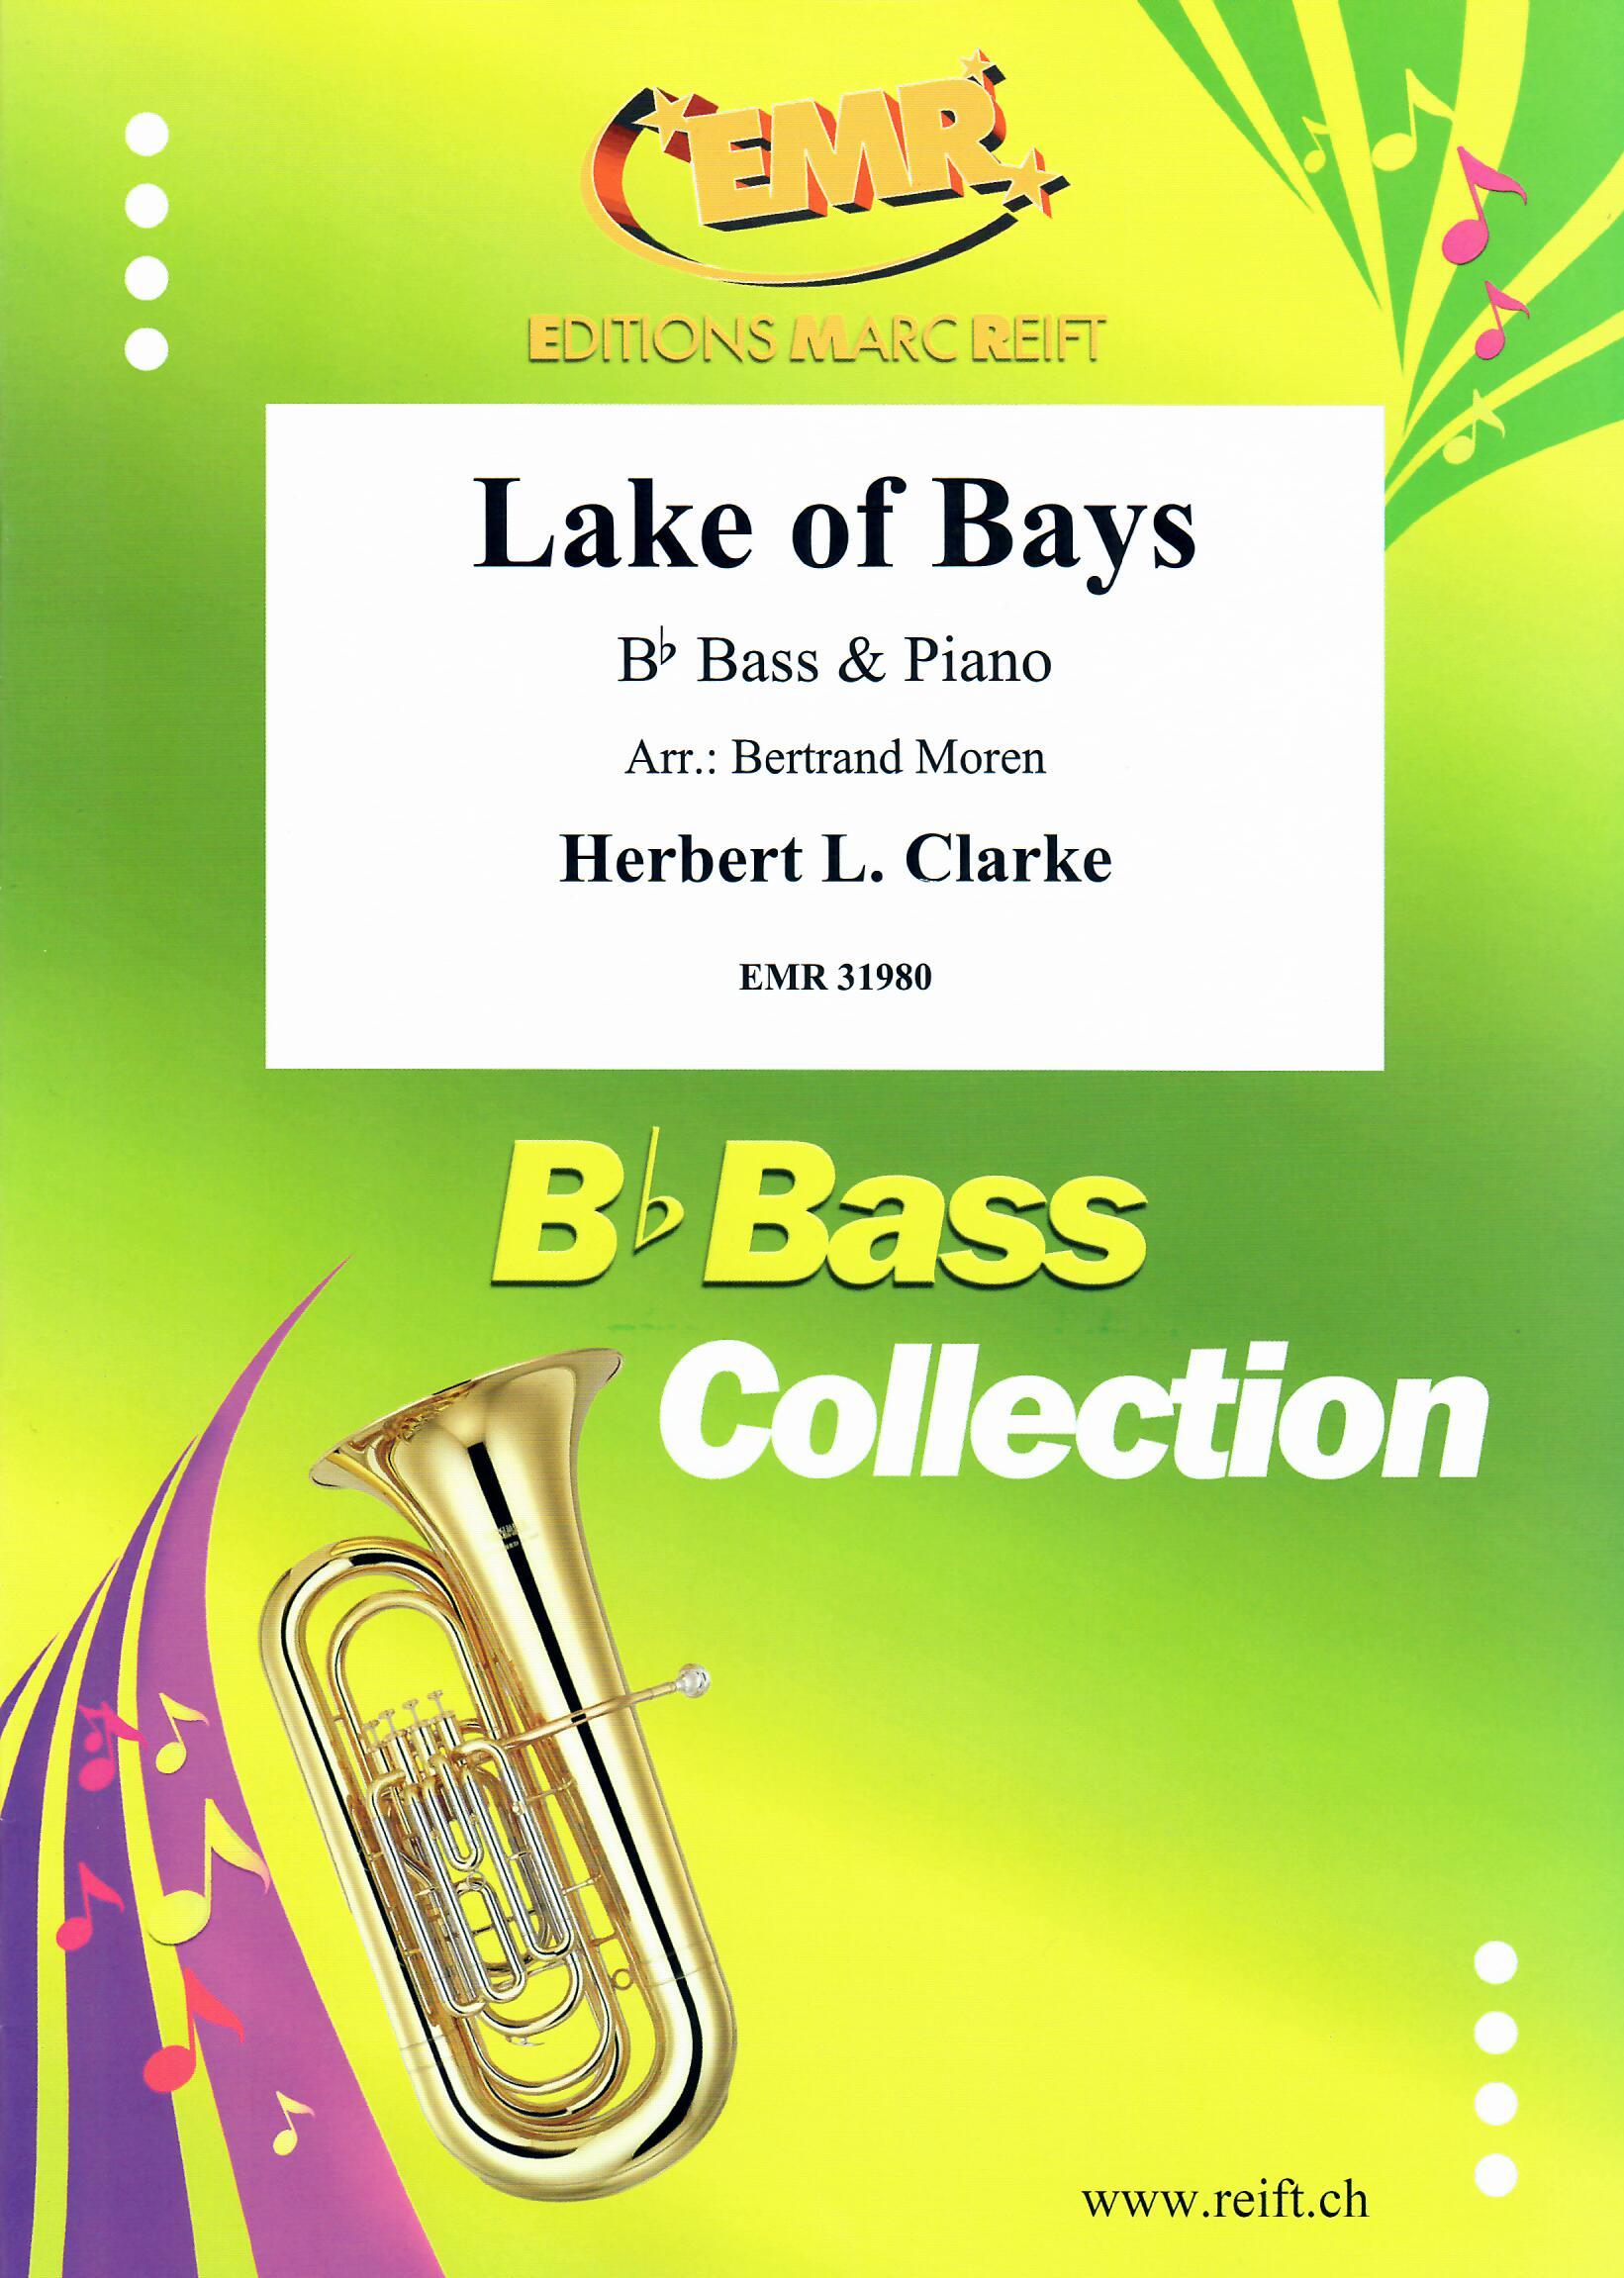 LAKE OF BAYS, SOLOS - E♭. Bass